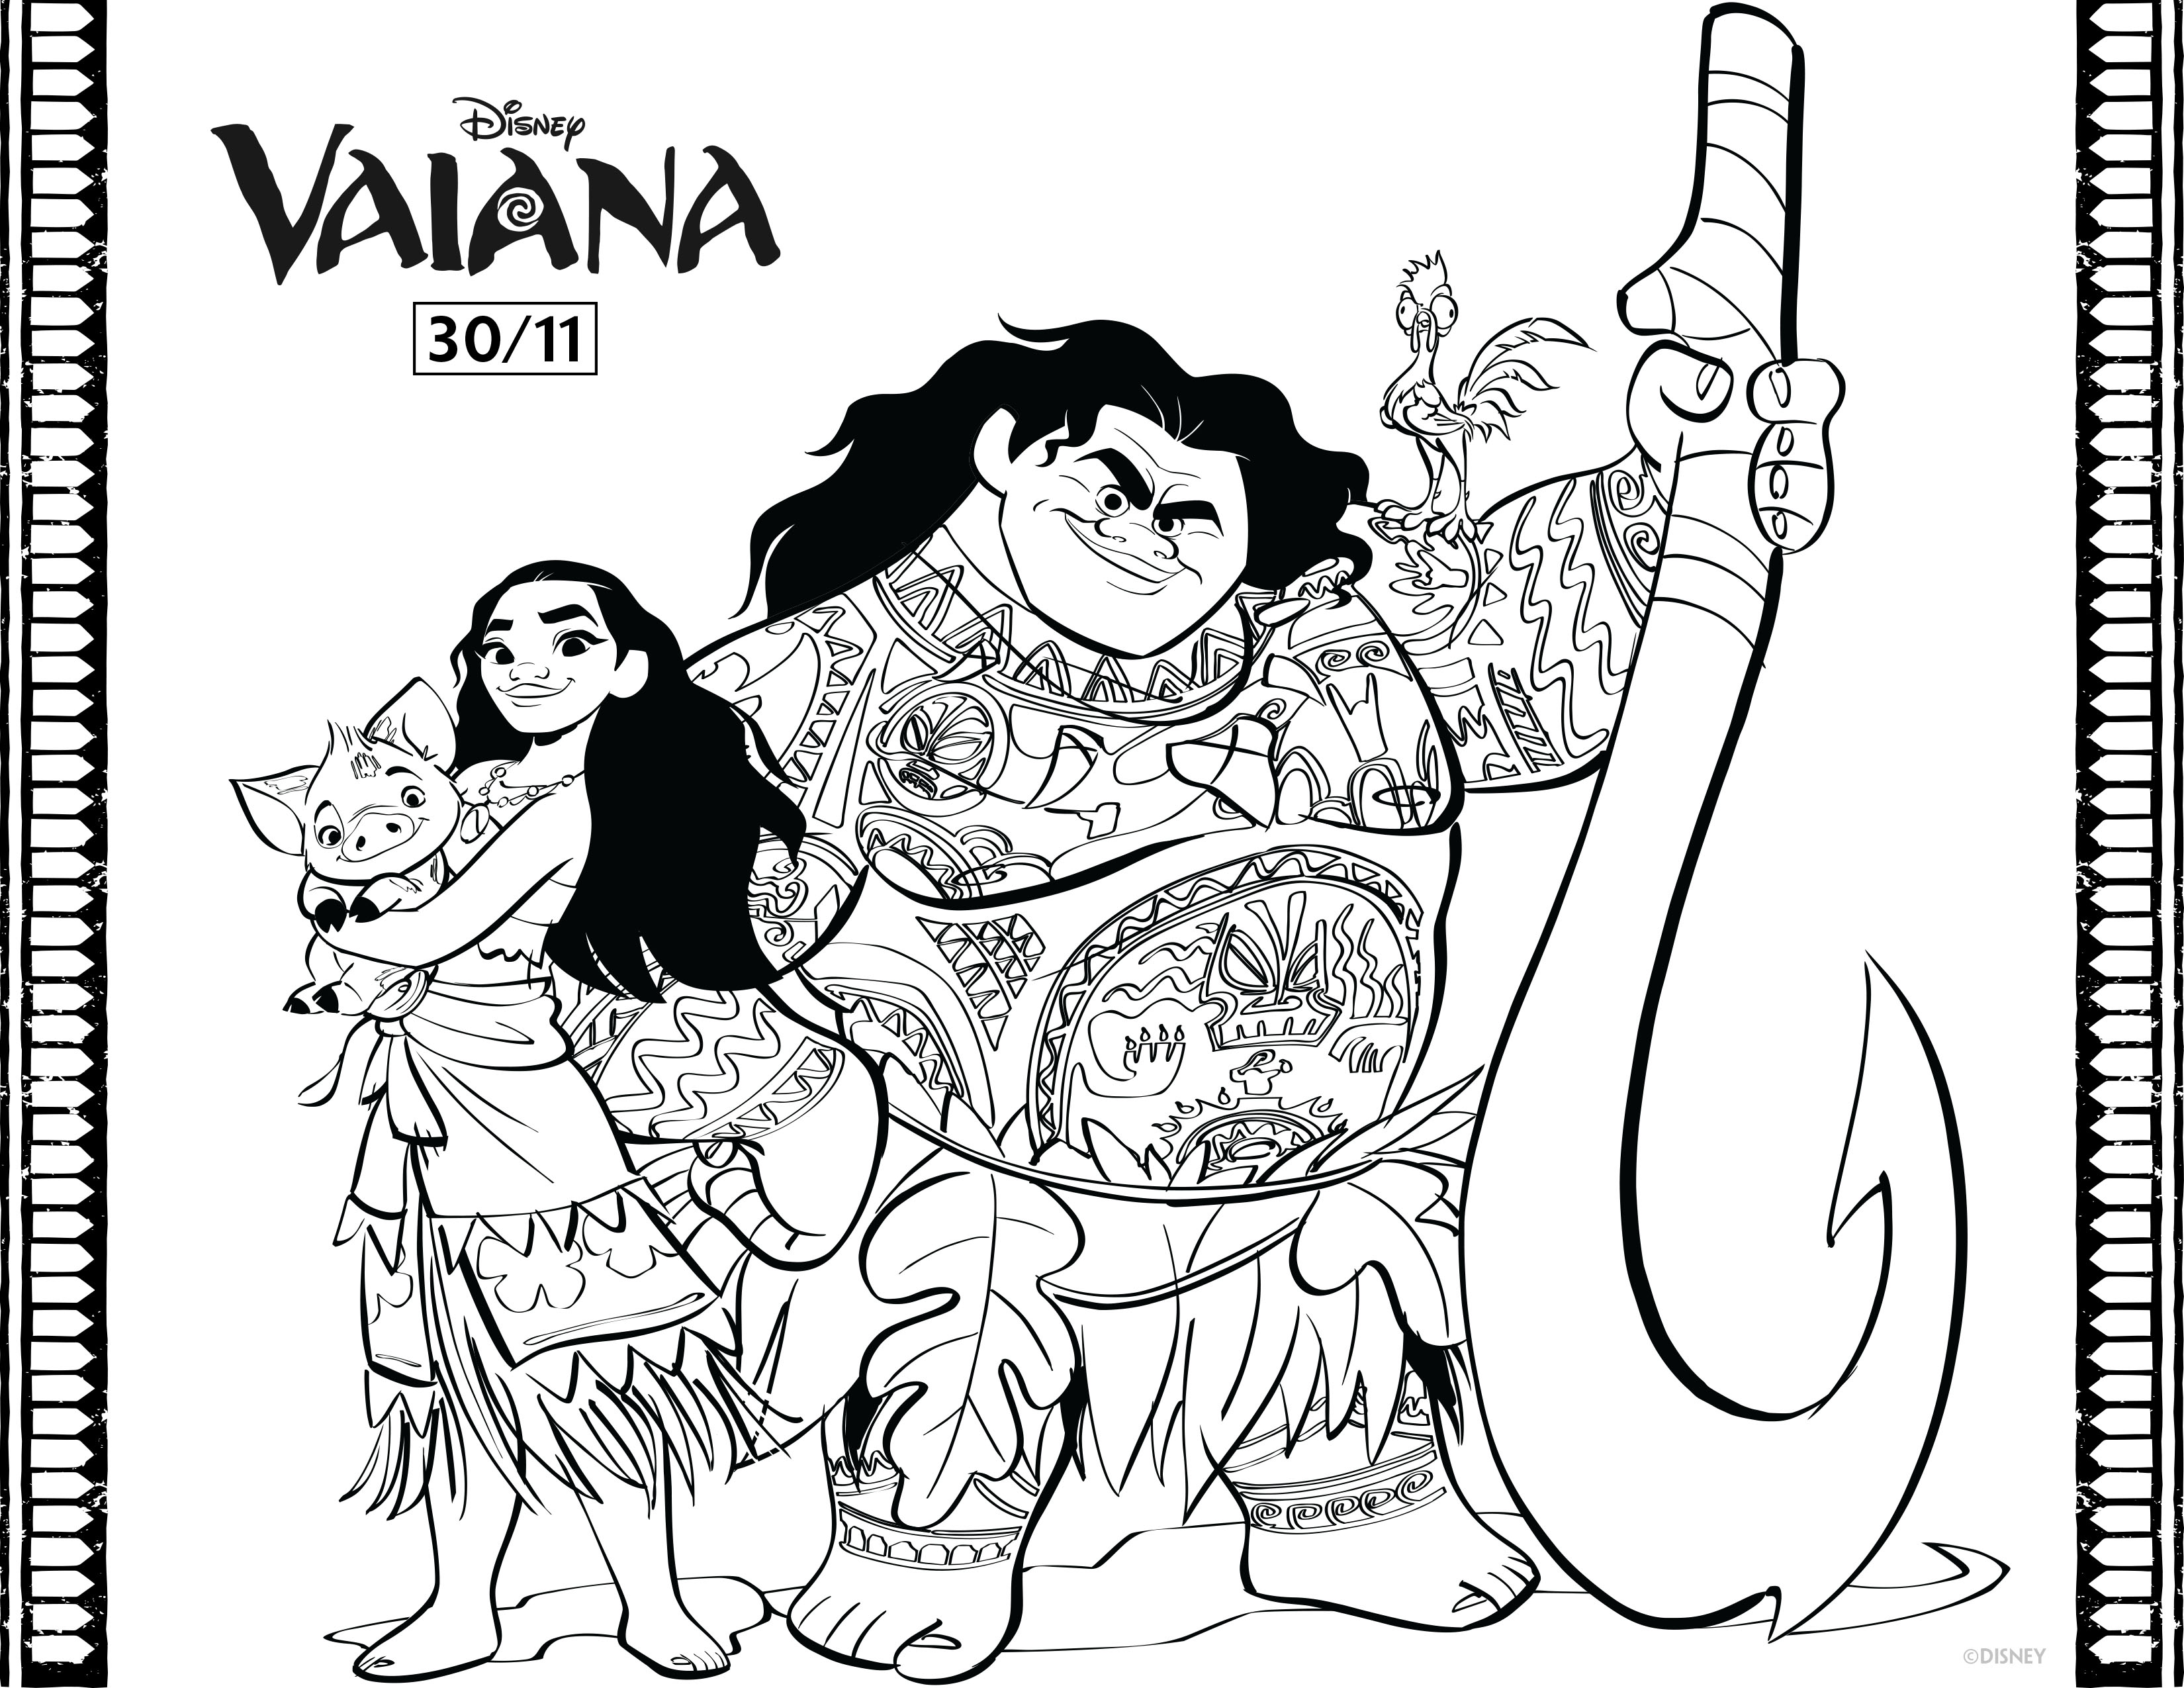 Vaiana and Maui, the new heroes of Disney